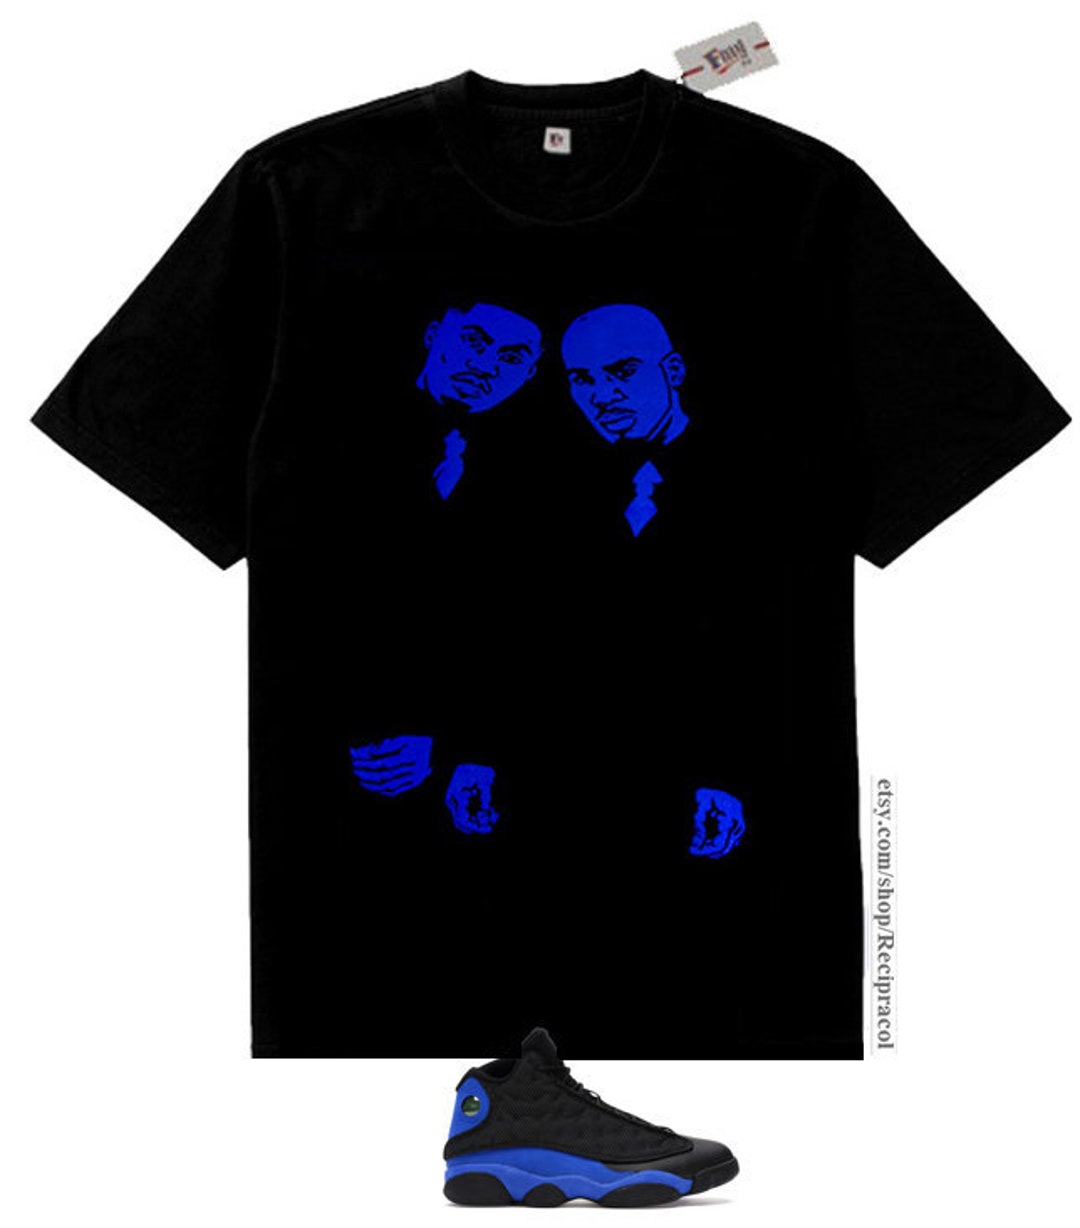  Shirt To Match Jordan Retro 5 University Blue,UNC Juice Graphic  Tee,UNC Toe (XL, Black) : Handmade Products